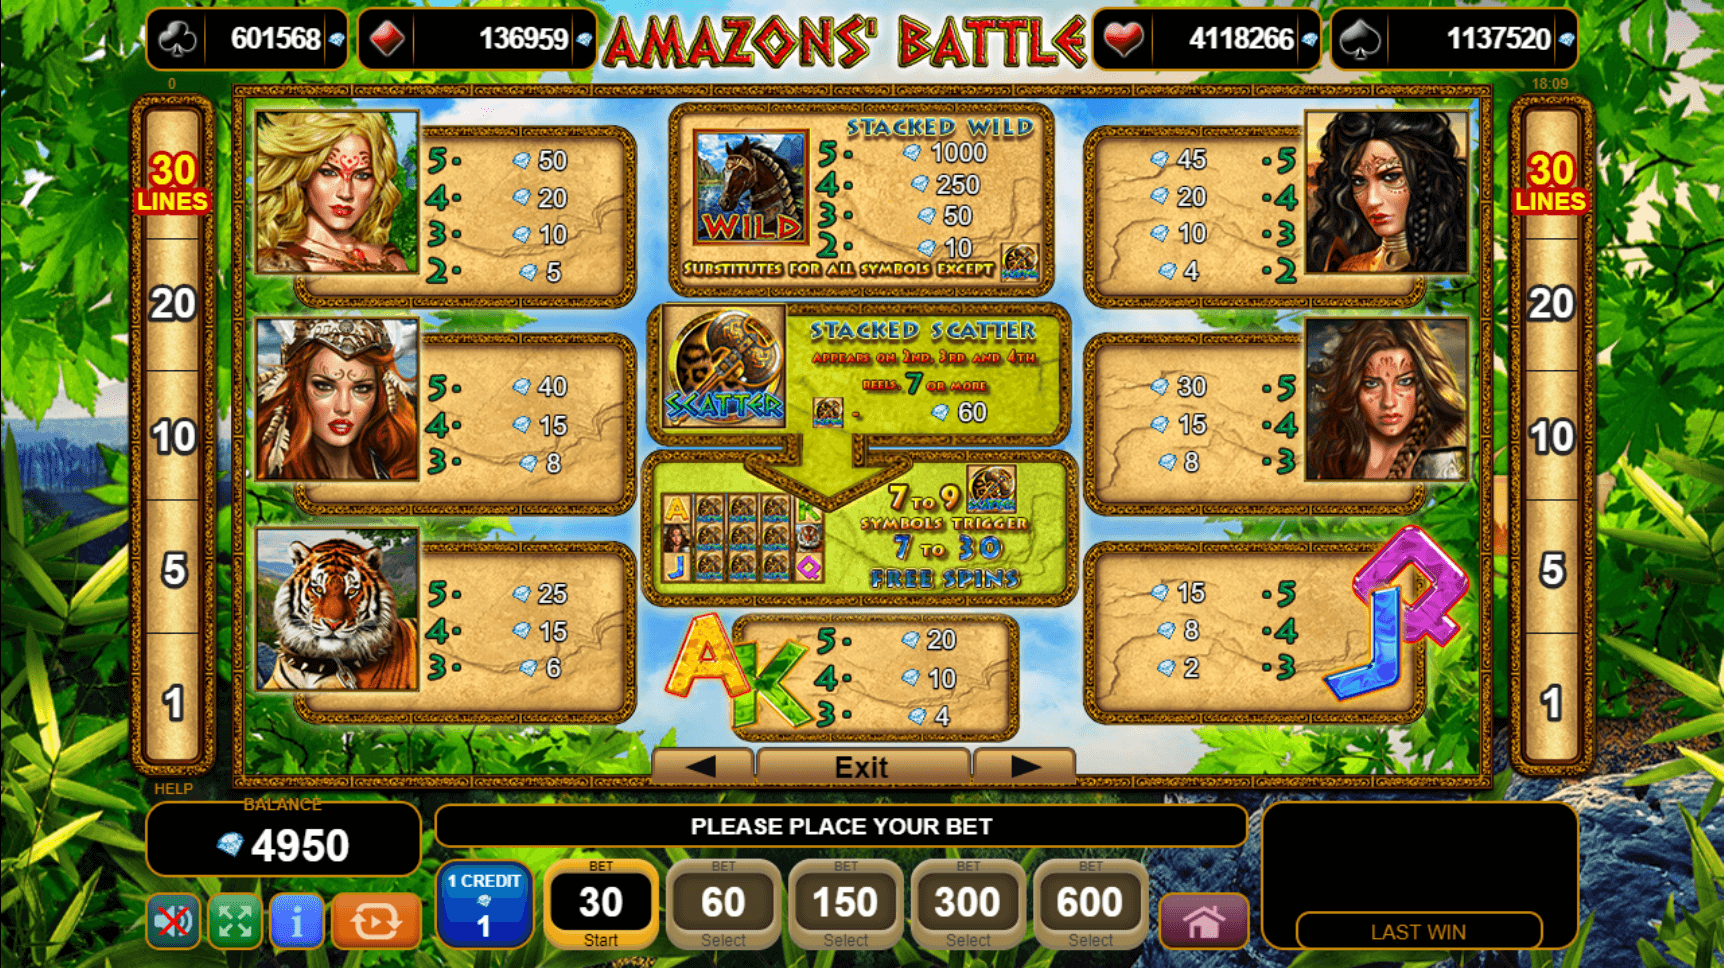 50 amazons battle slot machine detail image 1